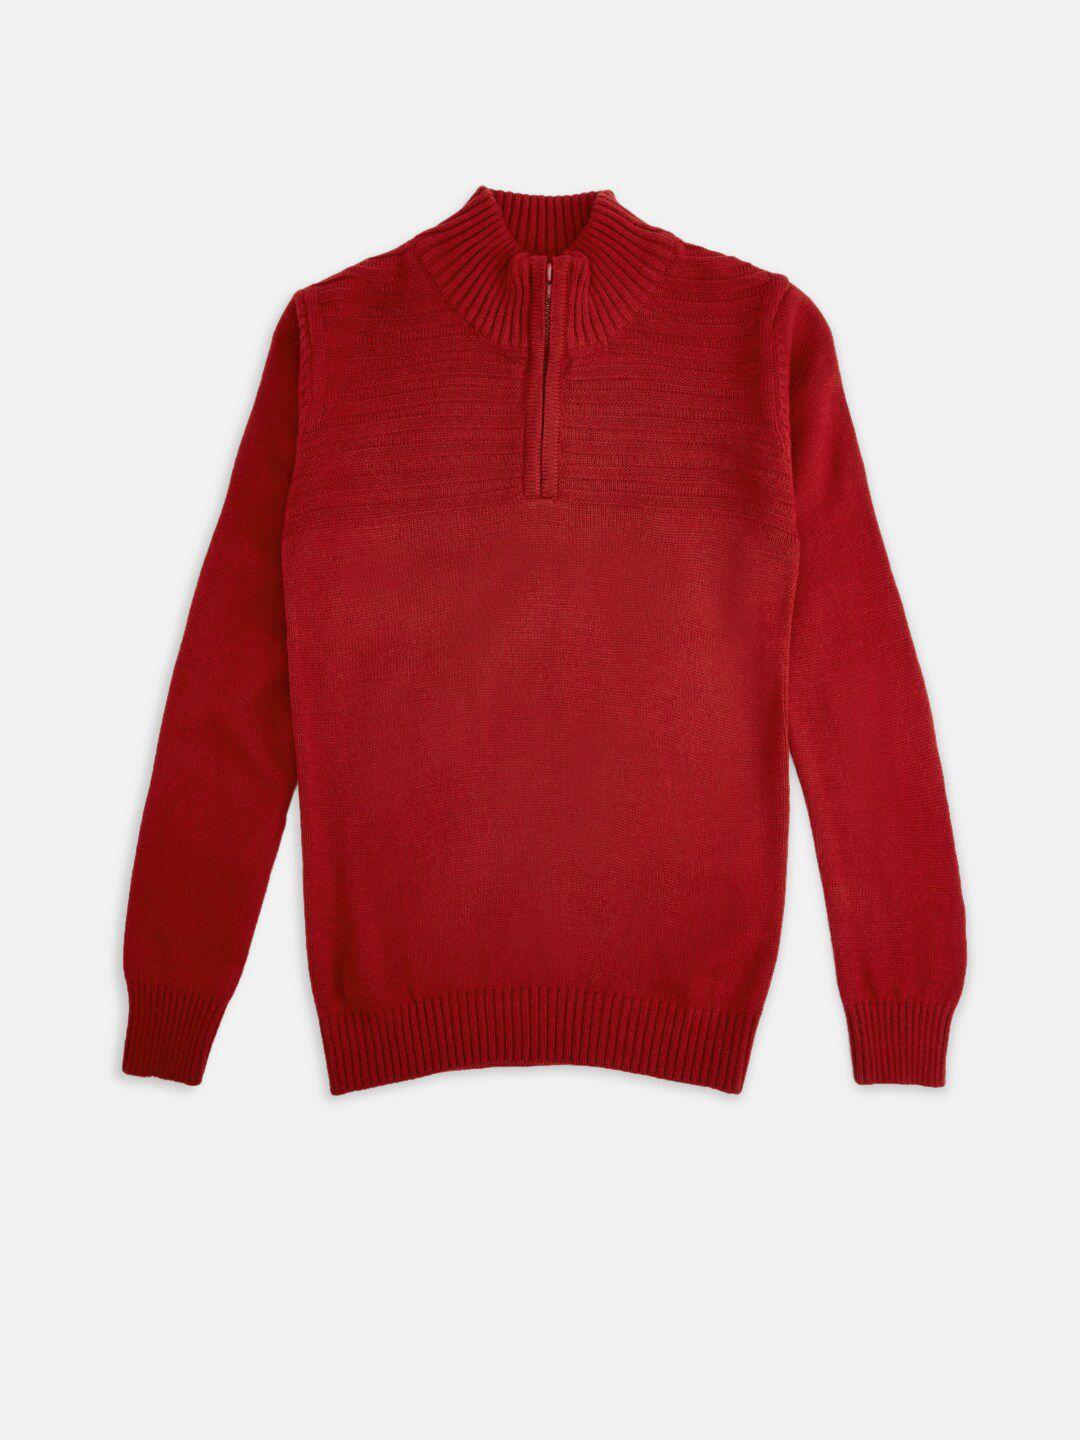 pantaloons-junior-boys-red-pullover-half-zipper-sweater